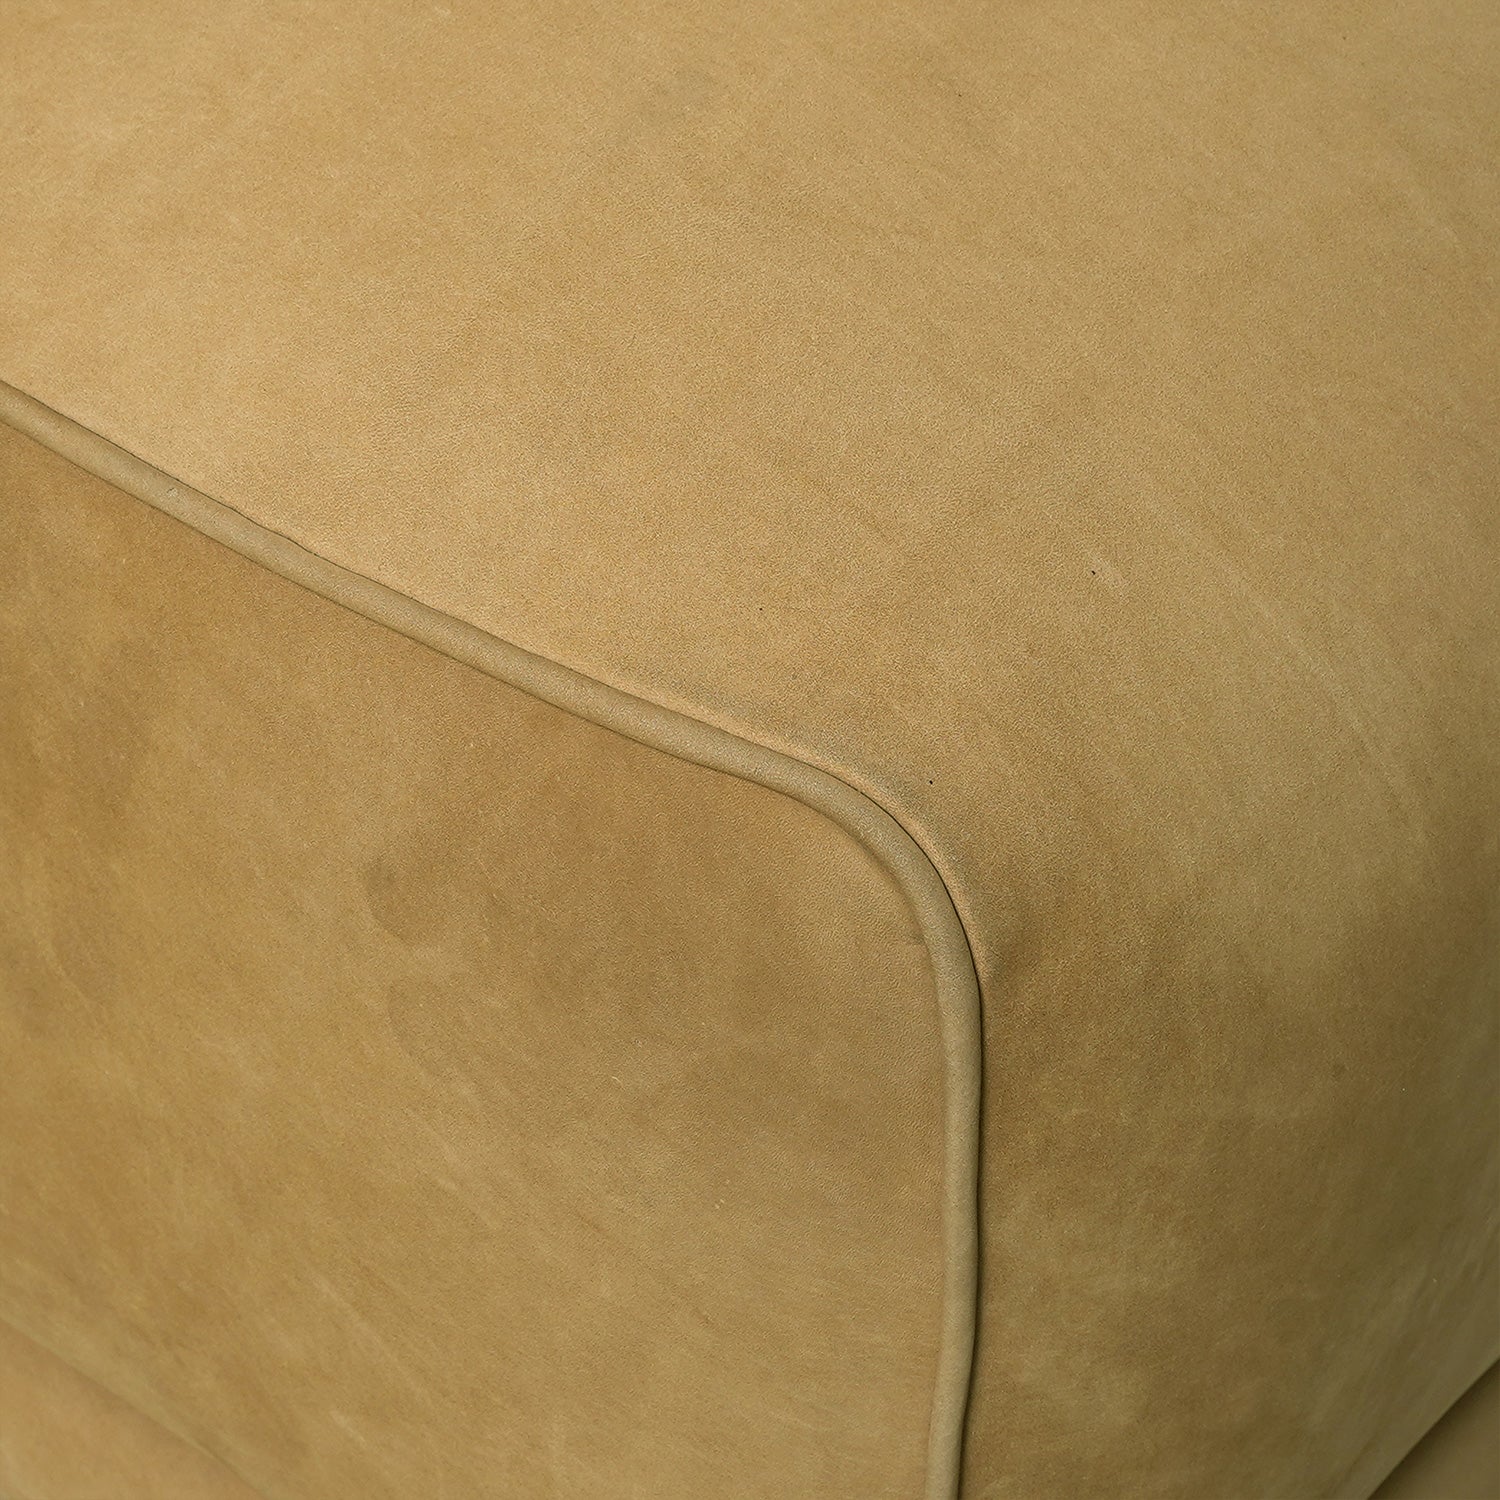 Botton Nubuck Leather Loveseat Seat Wheat Cushion Close Up